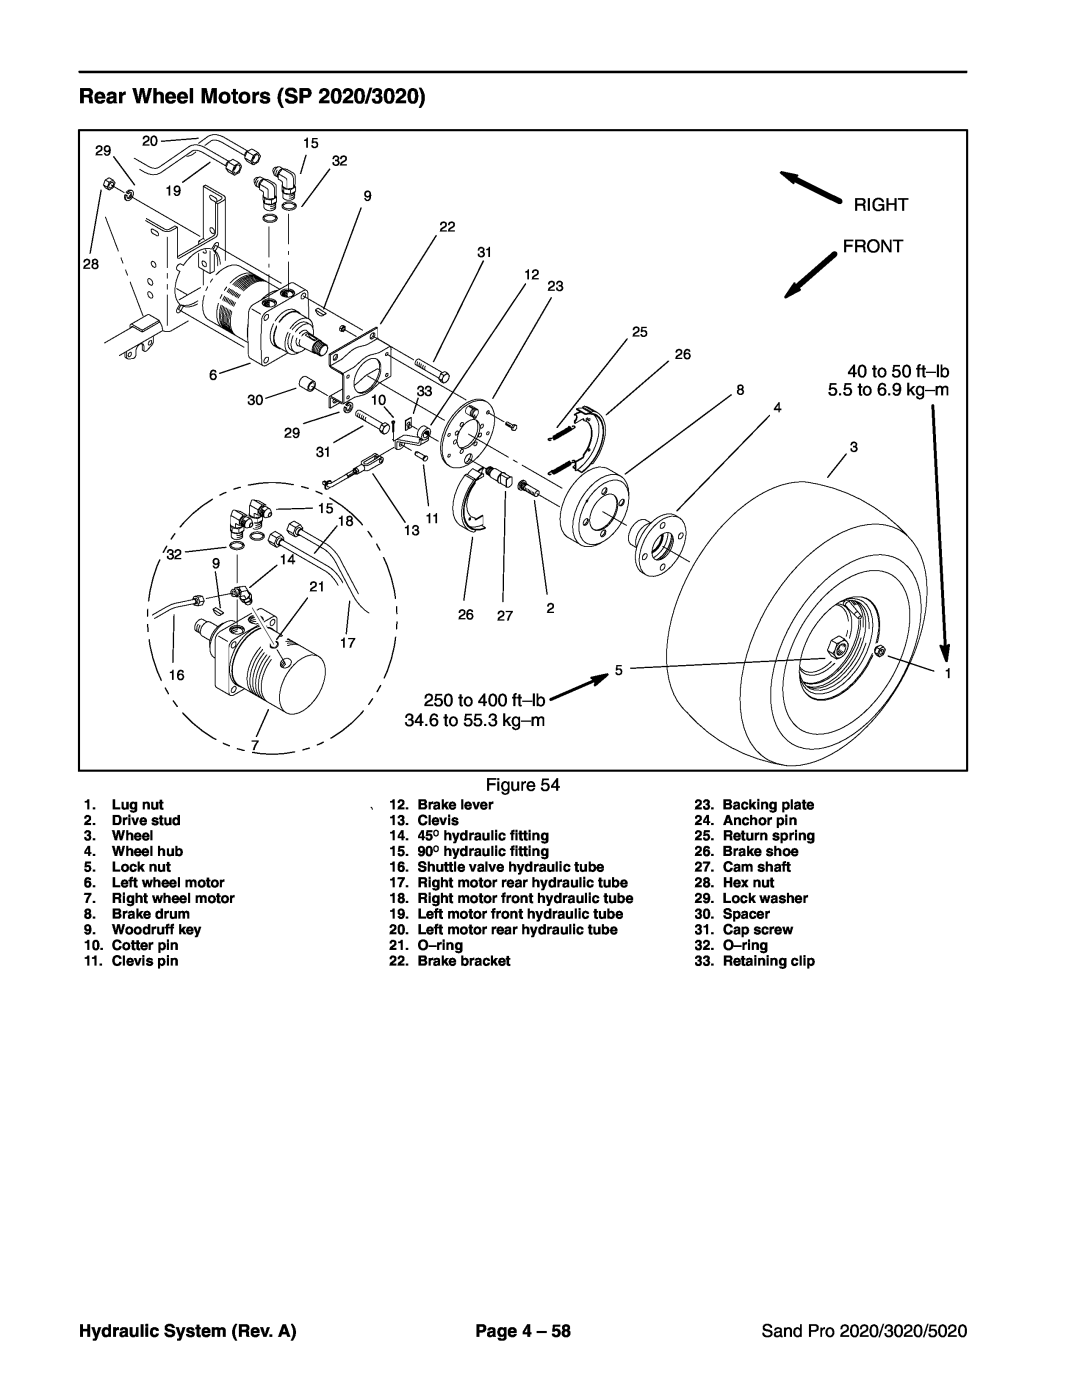 Toro Rear Wheel Motors SP 2020/3020, Hydraulic System Rev. A, Page 4, Sand Pro 2020/3020/5020, Backing plate 